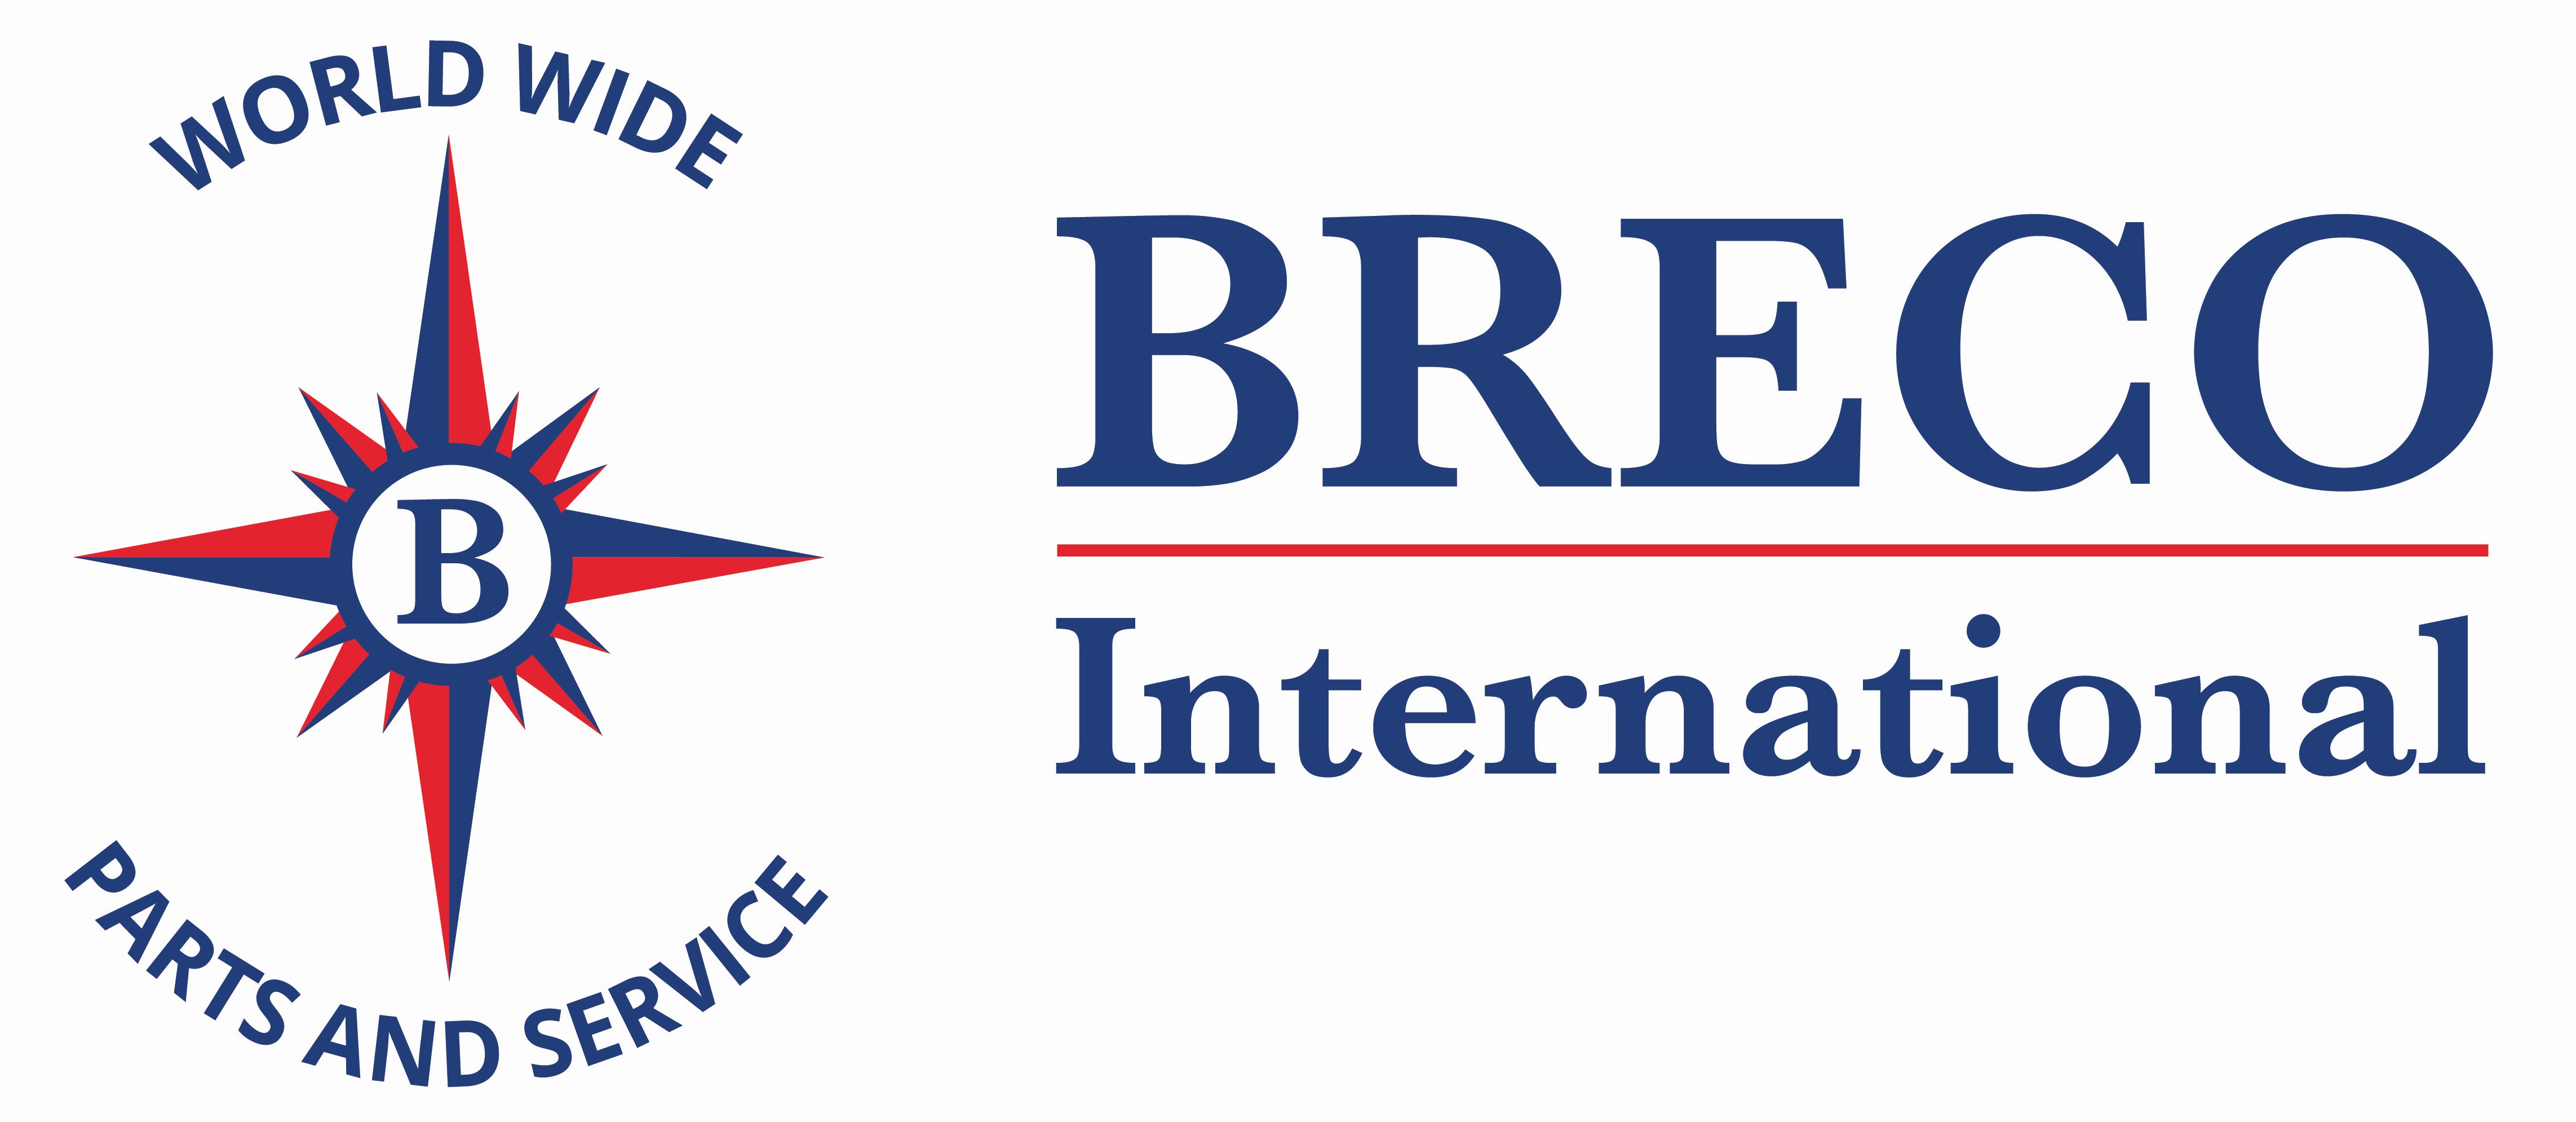 breco-international-logo-4